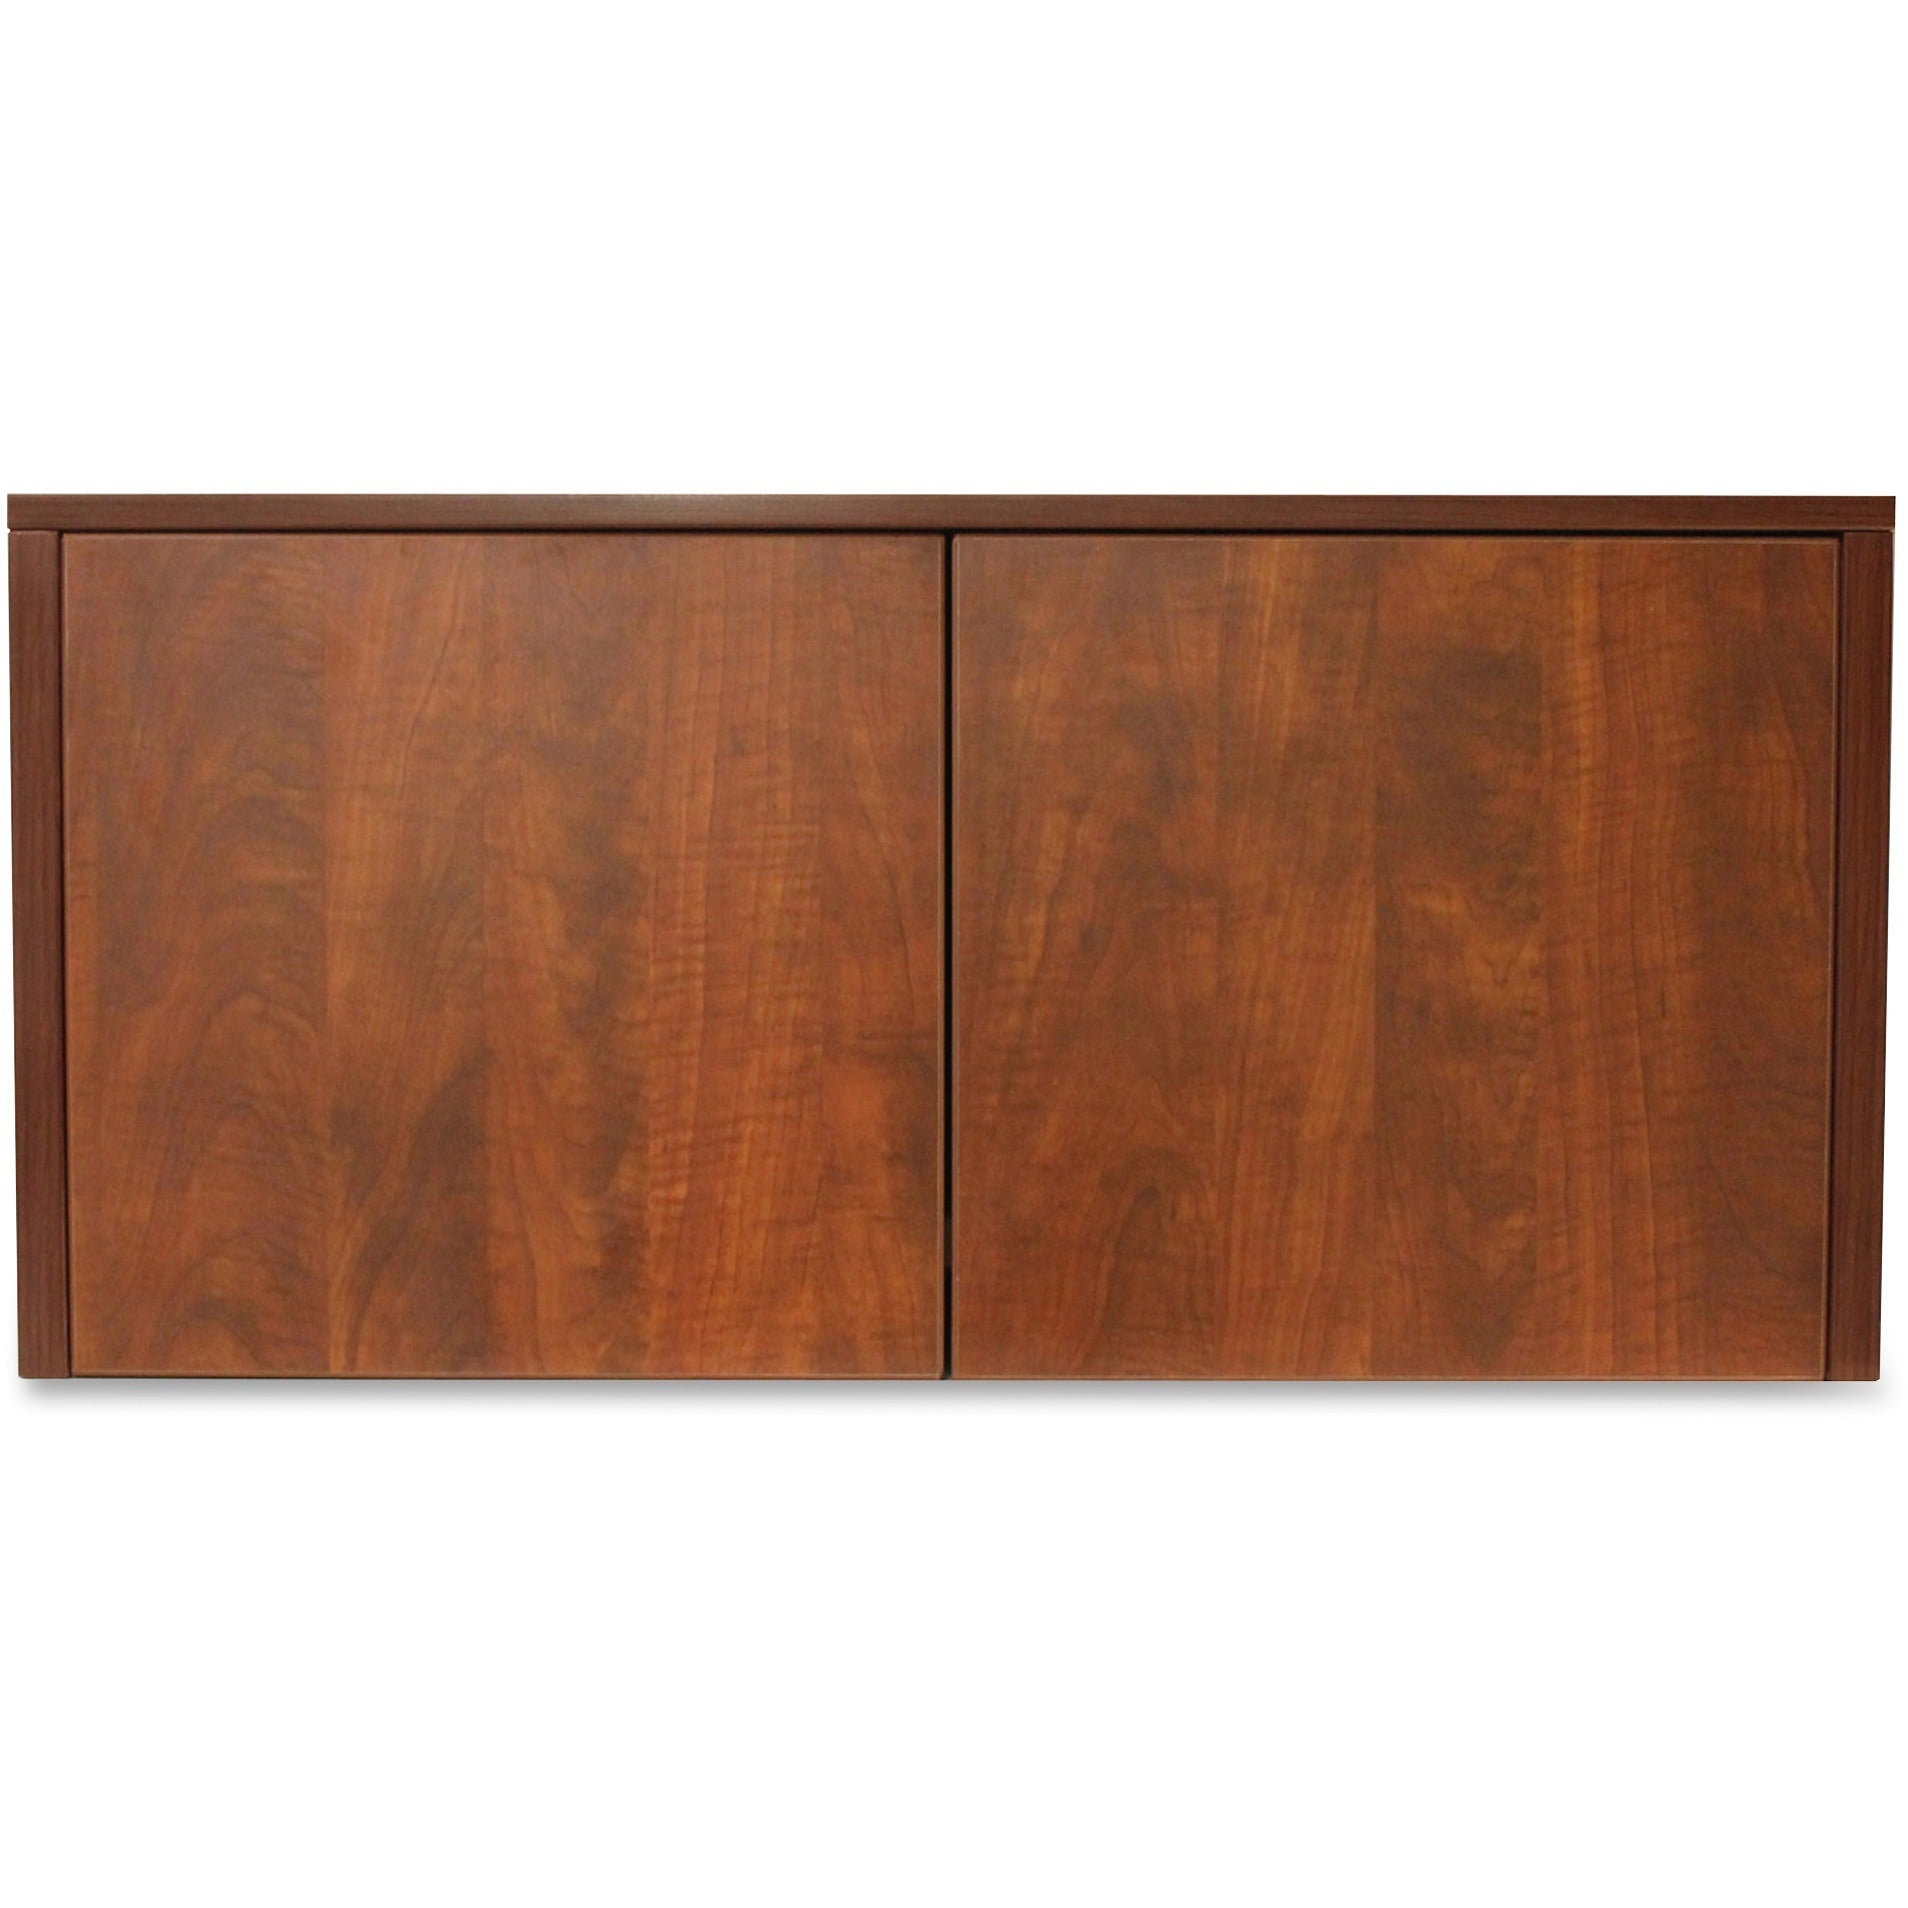 Lorell Essentials/Revelance Series Wall-Mount Hutch - 35.4" x 14.8"16.8" Hutch, 1" Side Panel, 0.6" Back Panel, 0.7" Panel, 1" Bottom Panel - Finish: Mahogany - Back Panel, Edge Banding - For Office - 